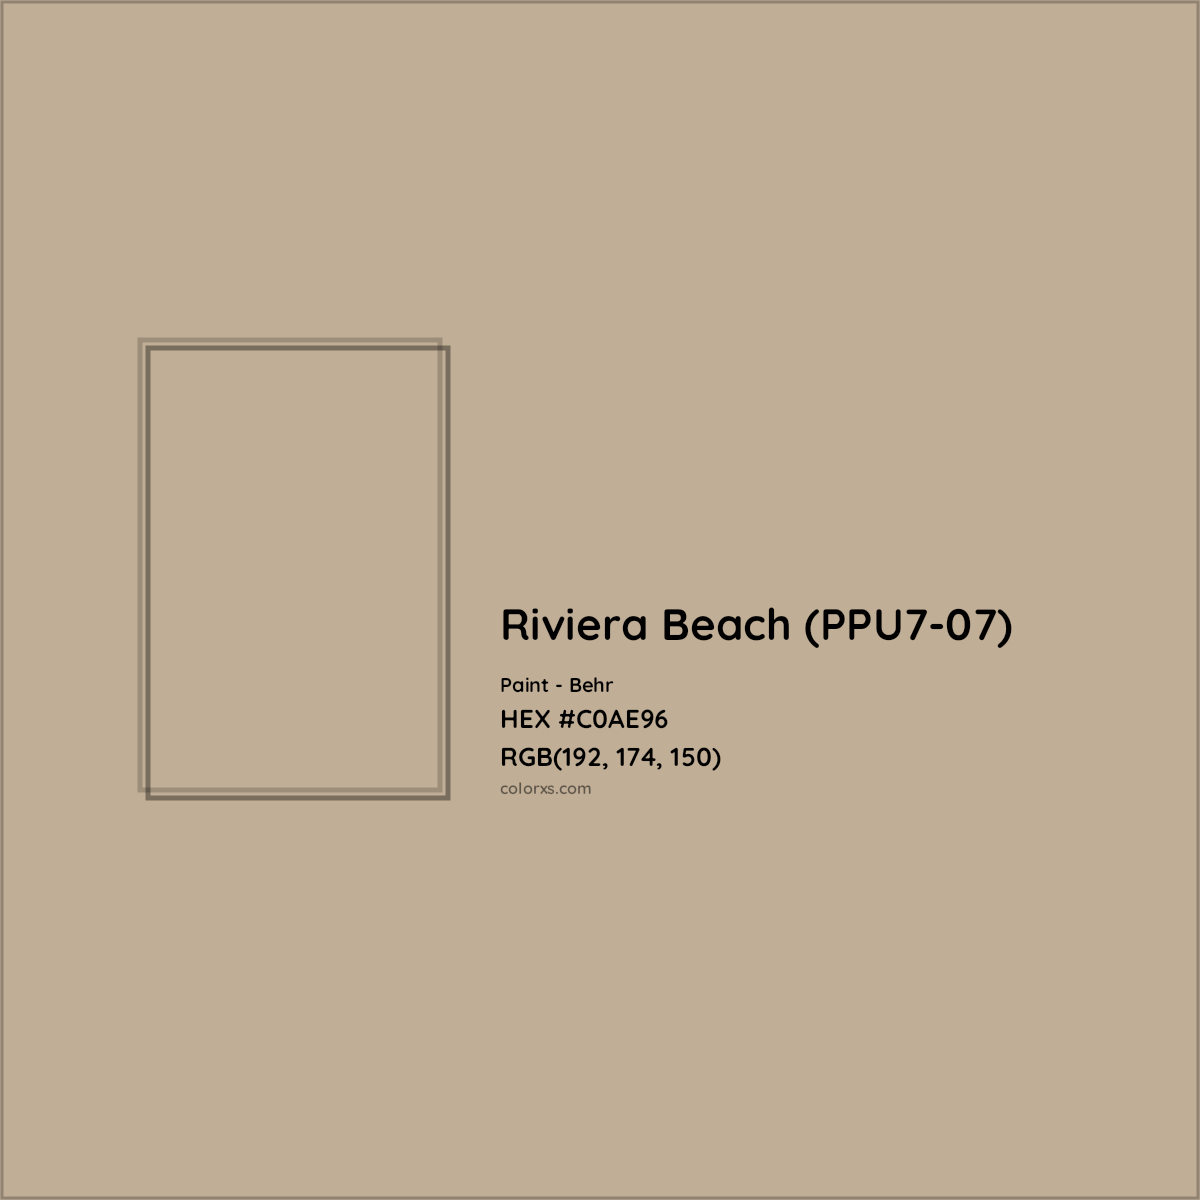 HEX #C0AE96 Riviera Beach (PPU7-07) Paint Behr - Color Code